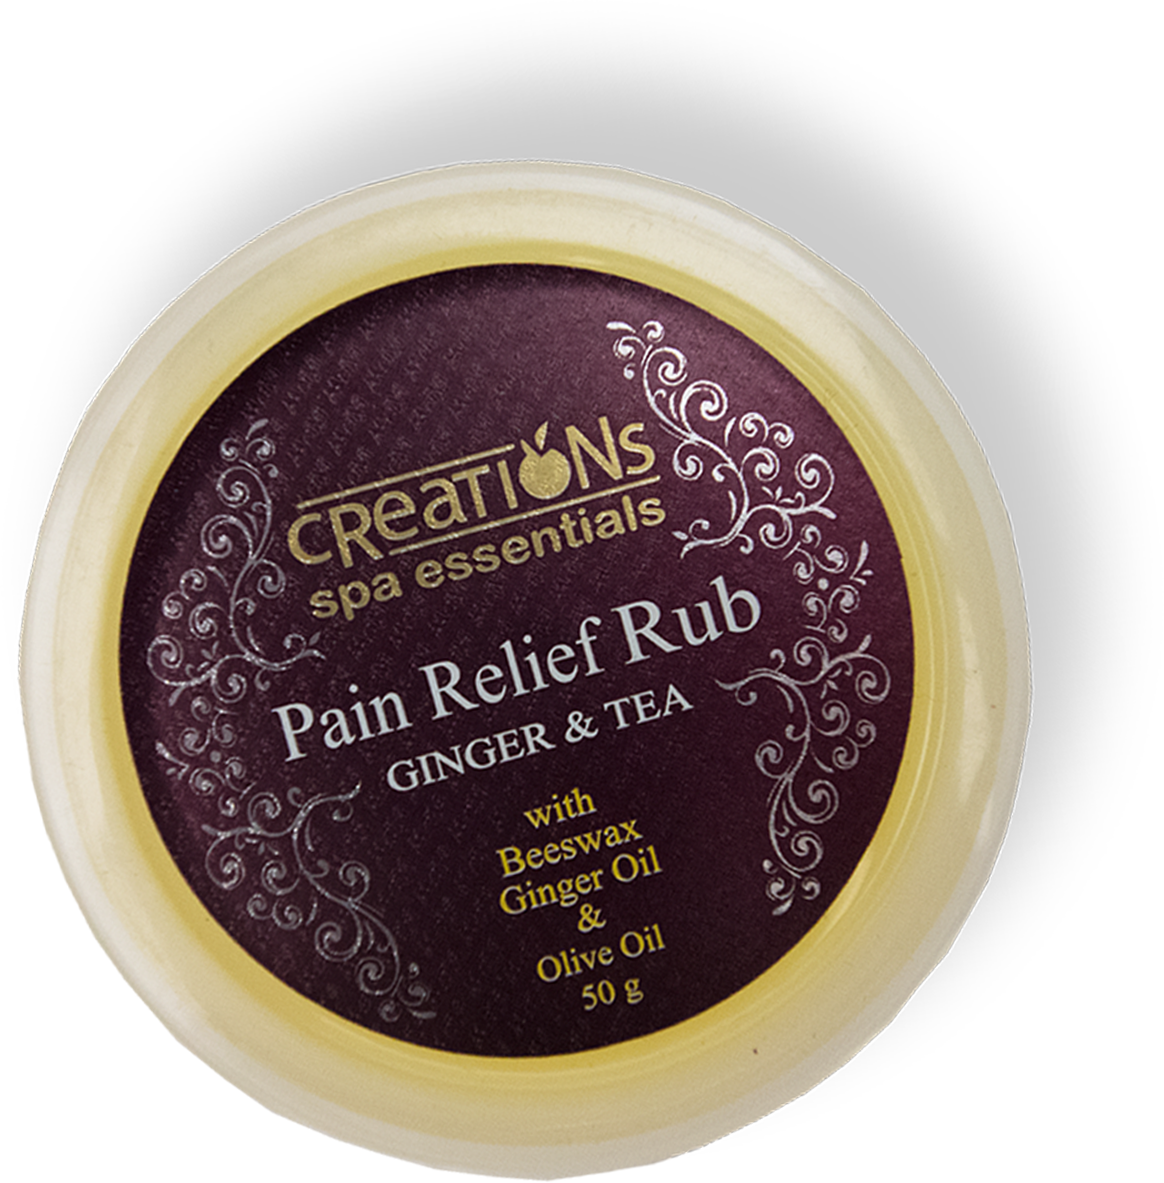 Creations Spa Essentials Pain Relief Rub – Ginger & Tea 50g